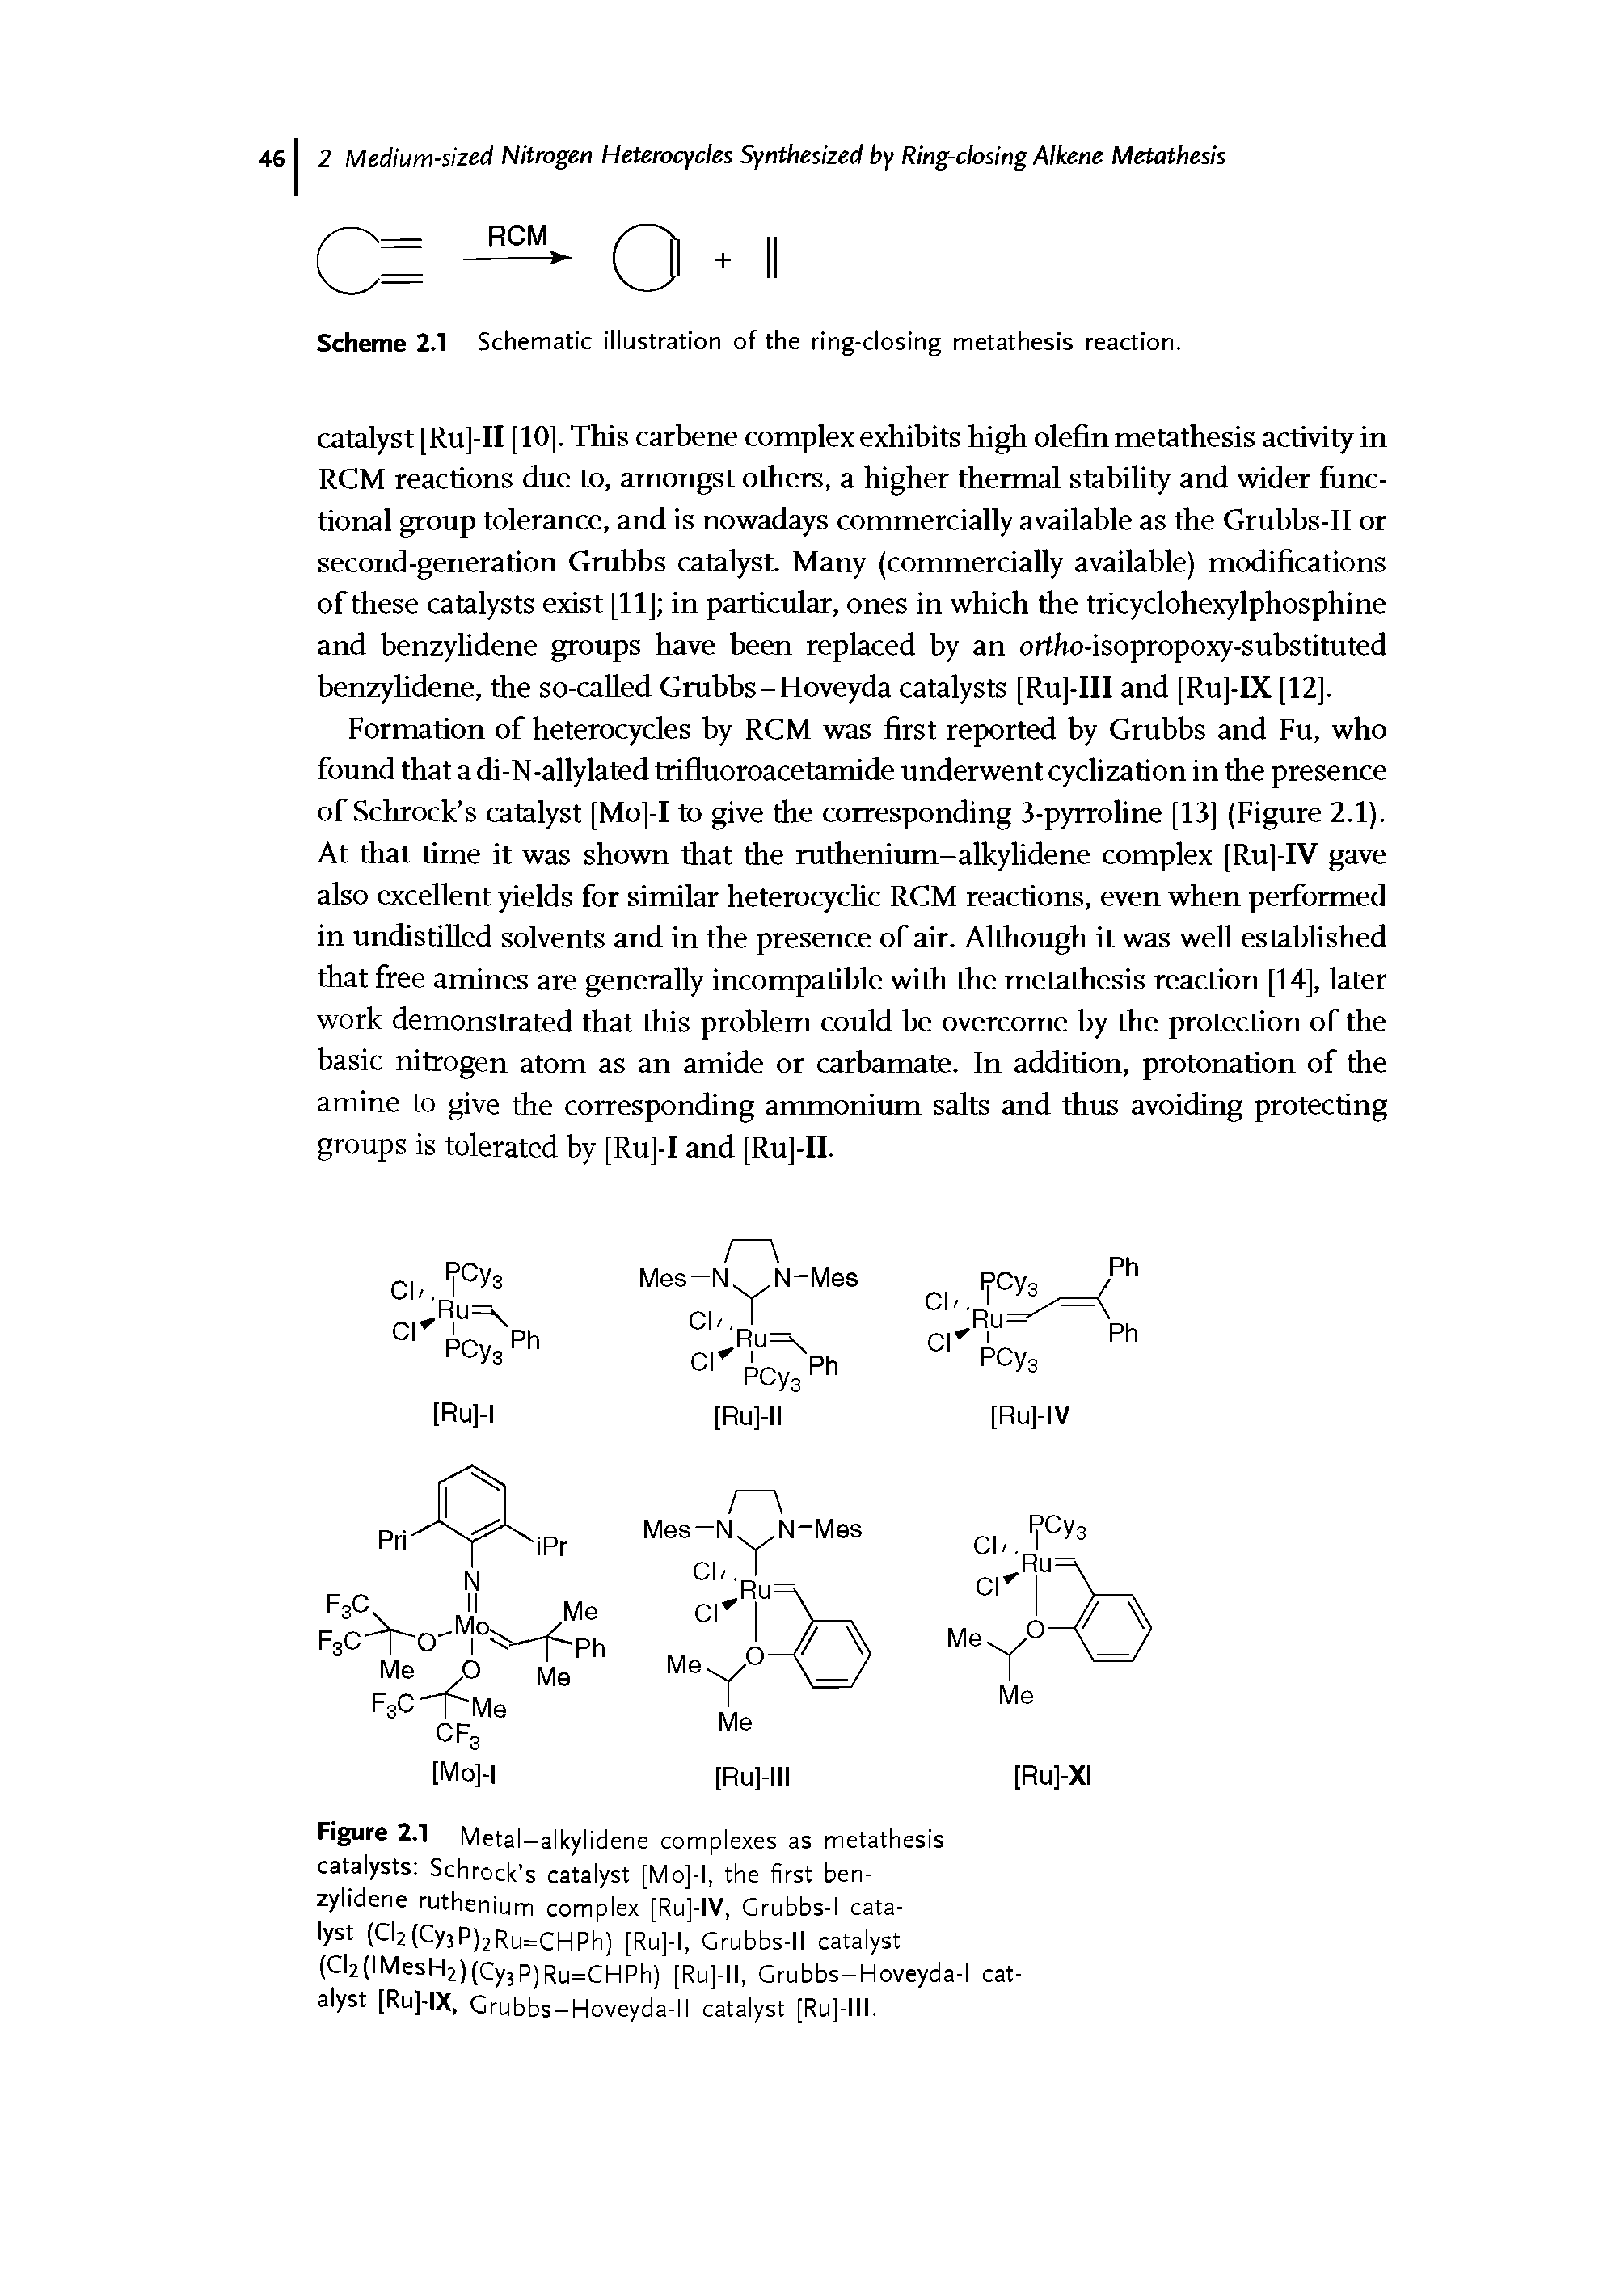 Figure 2.1 Metal-alkylidene complexes as metathesis catalysts. Schrock s catalyst [Mo]-l, the first benzyl ene ruthenium complex [Ru]-IV, Grubbs-I catalyst (Cl2(CyjP)2Ru cHph) Grubbs-II catalyst...